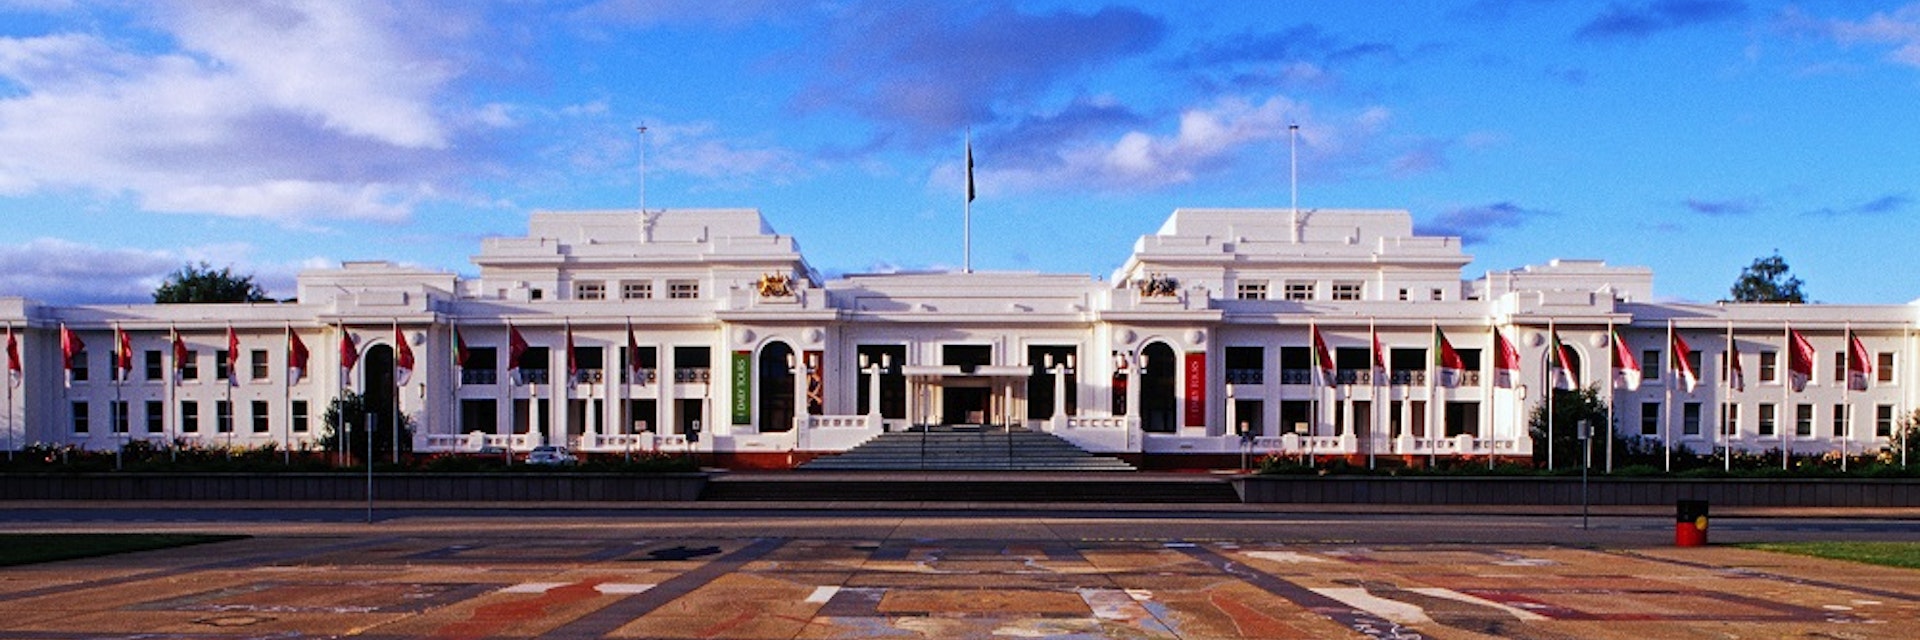 Australia, Australian Capital Territory (ACT), Canberra